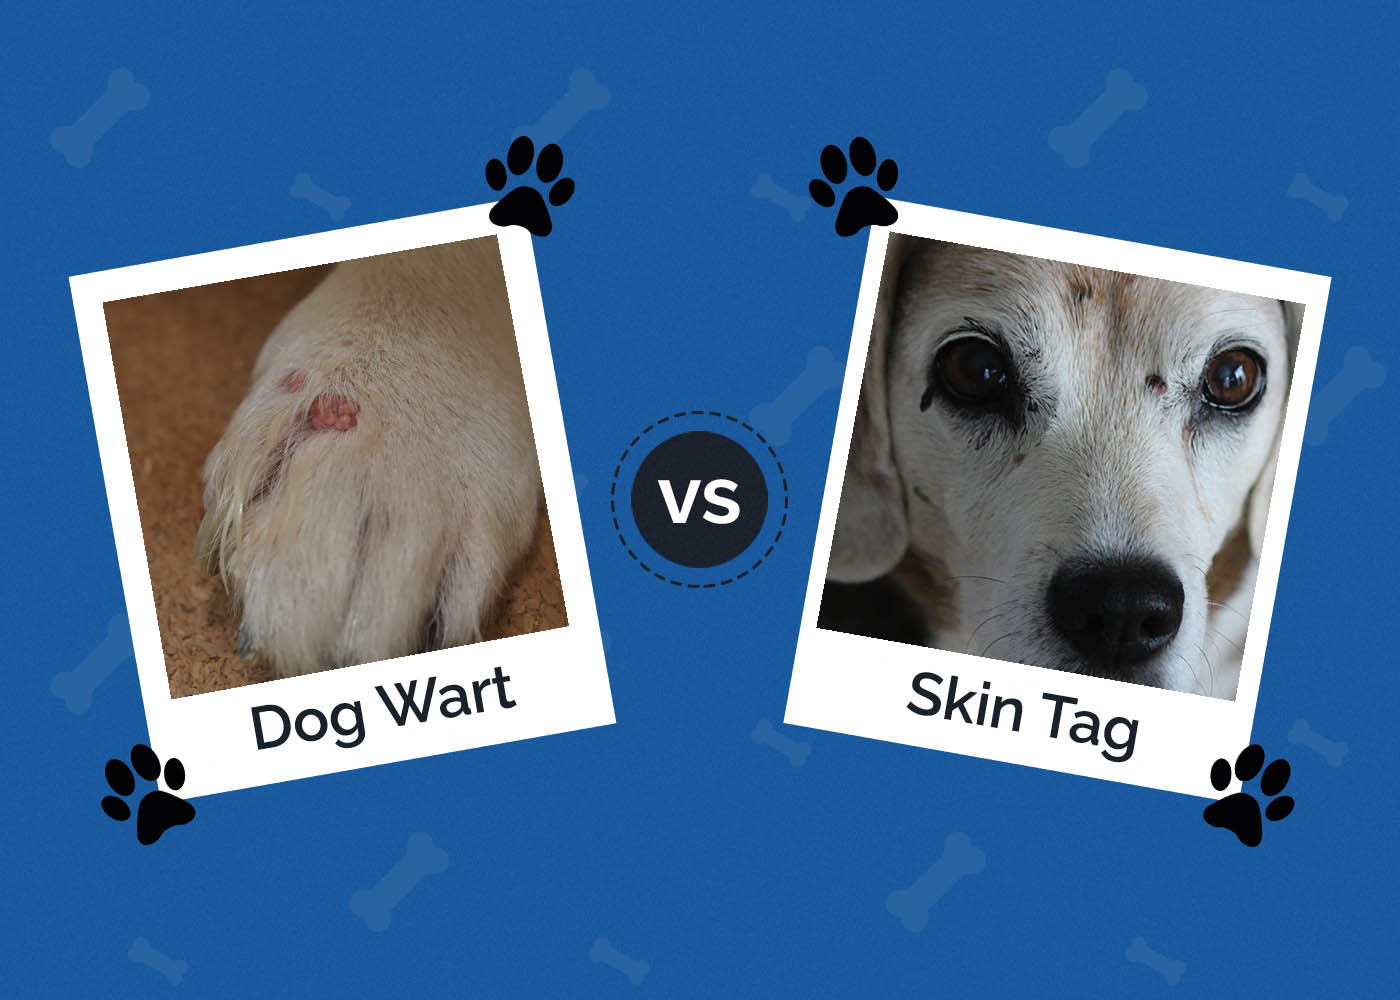 Dog Wart vs Skin Tag